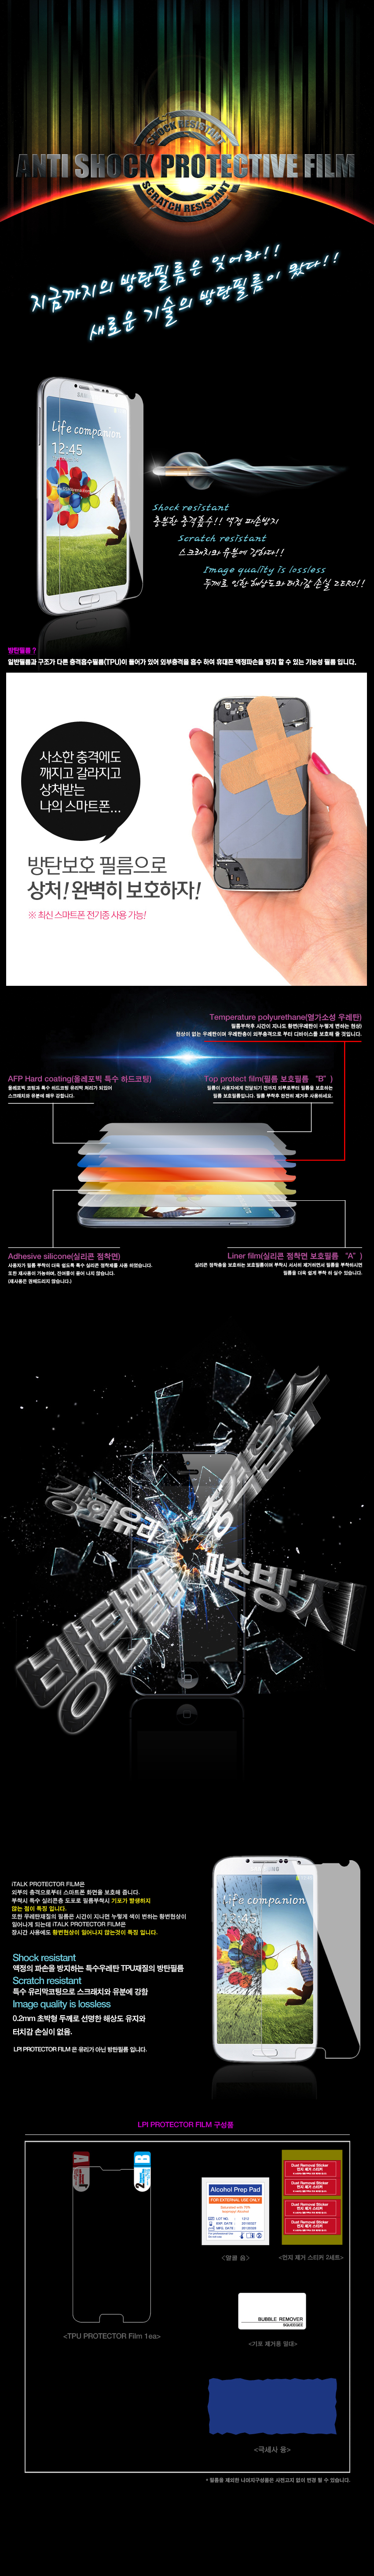 LG G4 (iTALK) TPU 9H 방탄필름 8,500원 - 엘피아이 디지털, 모바일 액세서리, 보호필름, 기타 스마트폰 바보사랑 LG G4 (iTALK) TPU 9H 방탄필름 8,500원 - 엘피아이 디지털, 모바일 액세서리, 보호필름, 기타 스마트폰 바보사랑